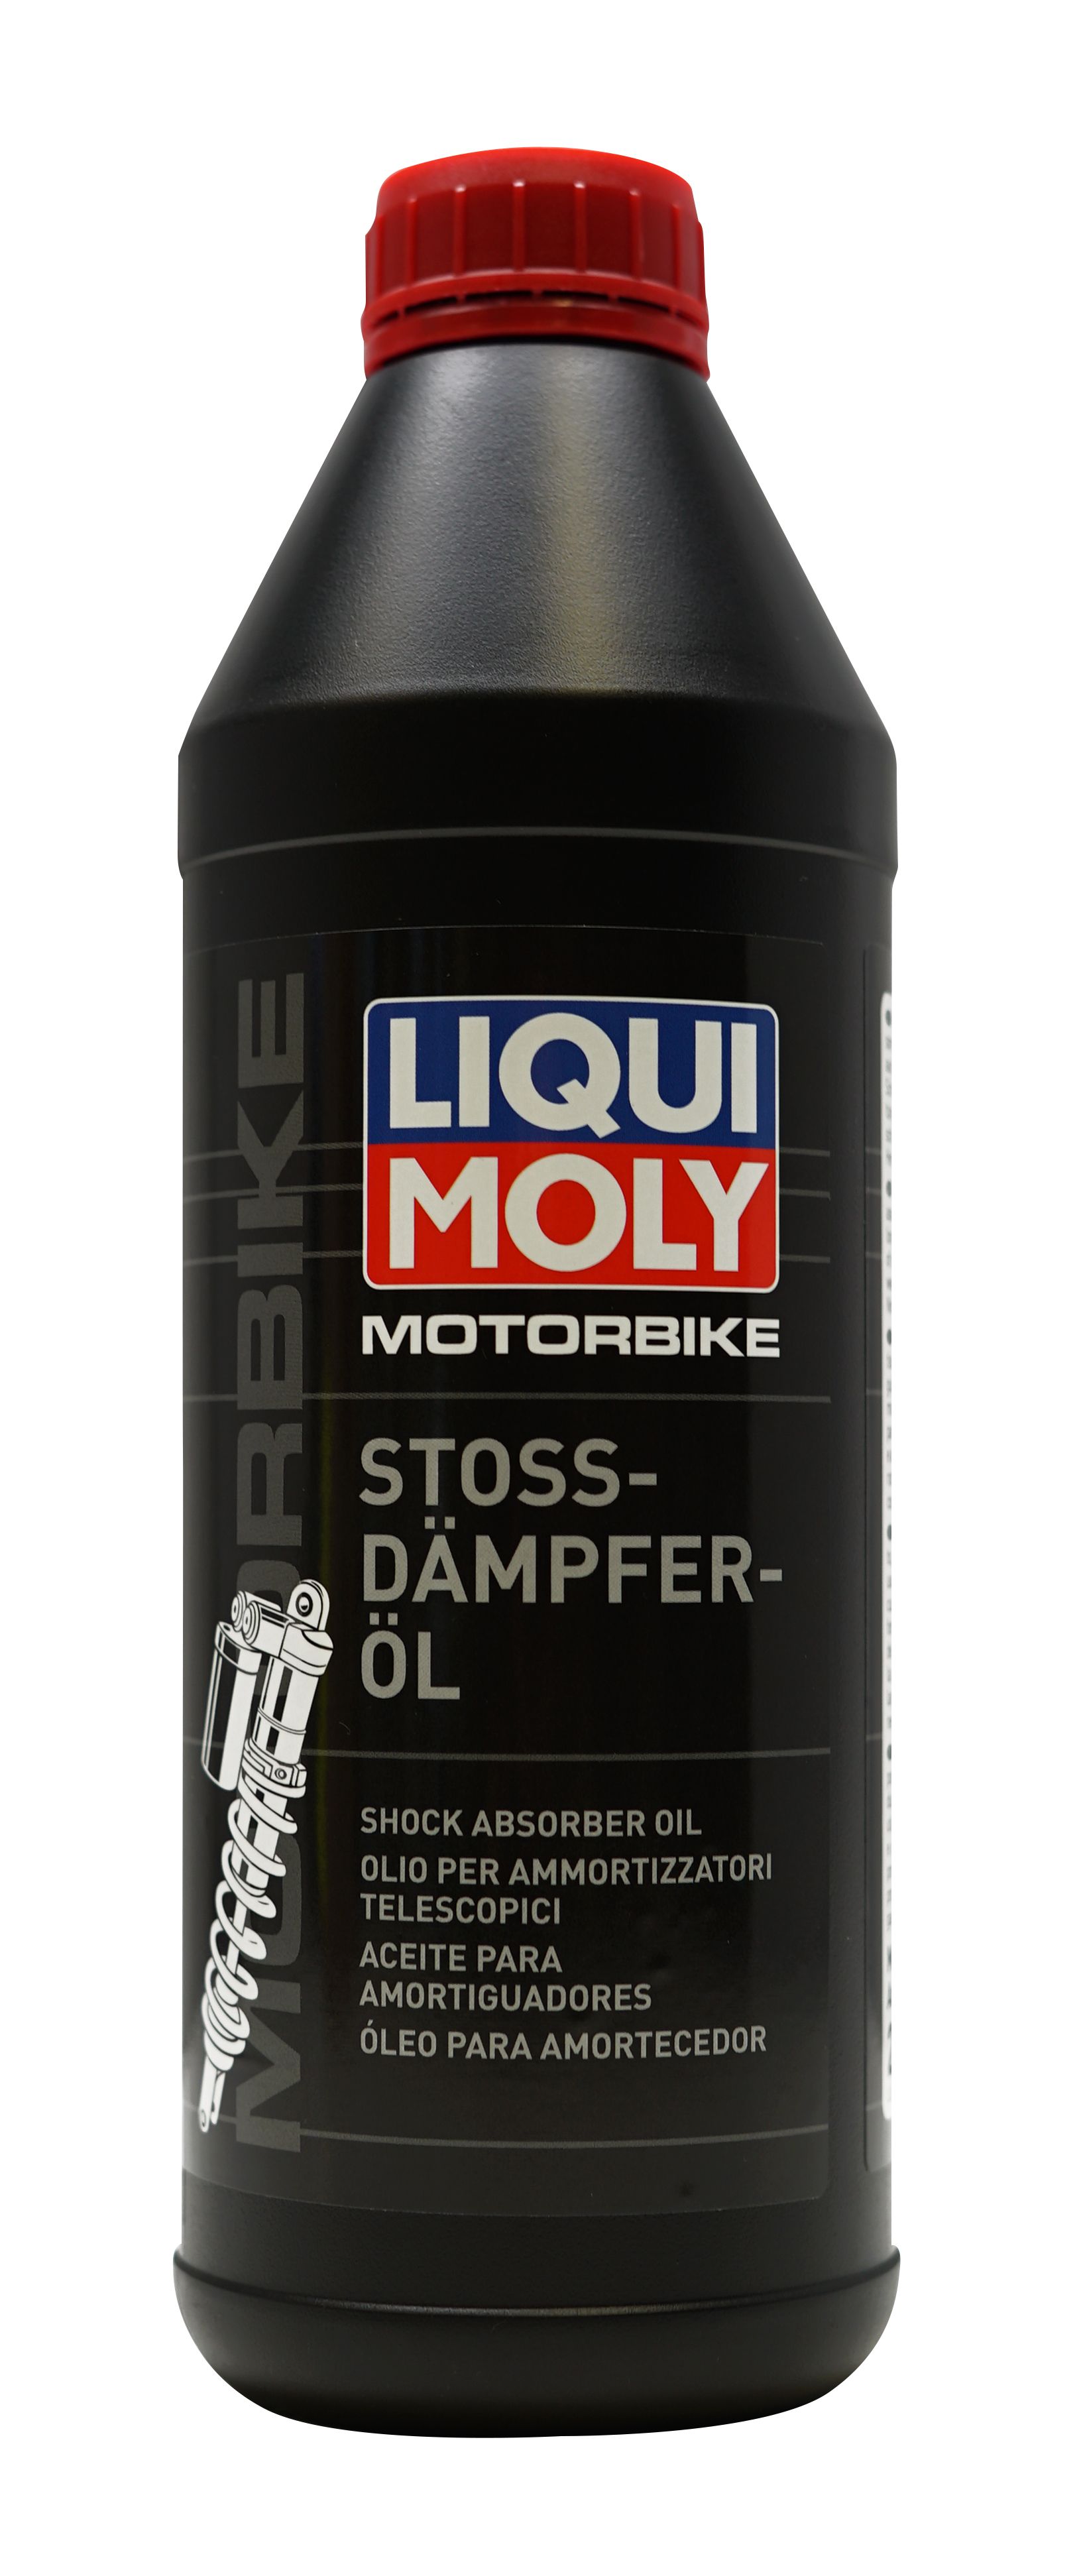 Масло вилочное и амортизаторное Liqui Moly Motorbike Stossdaempferoil